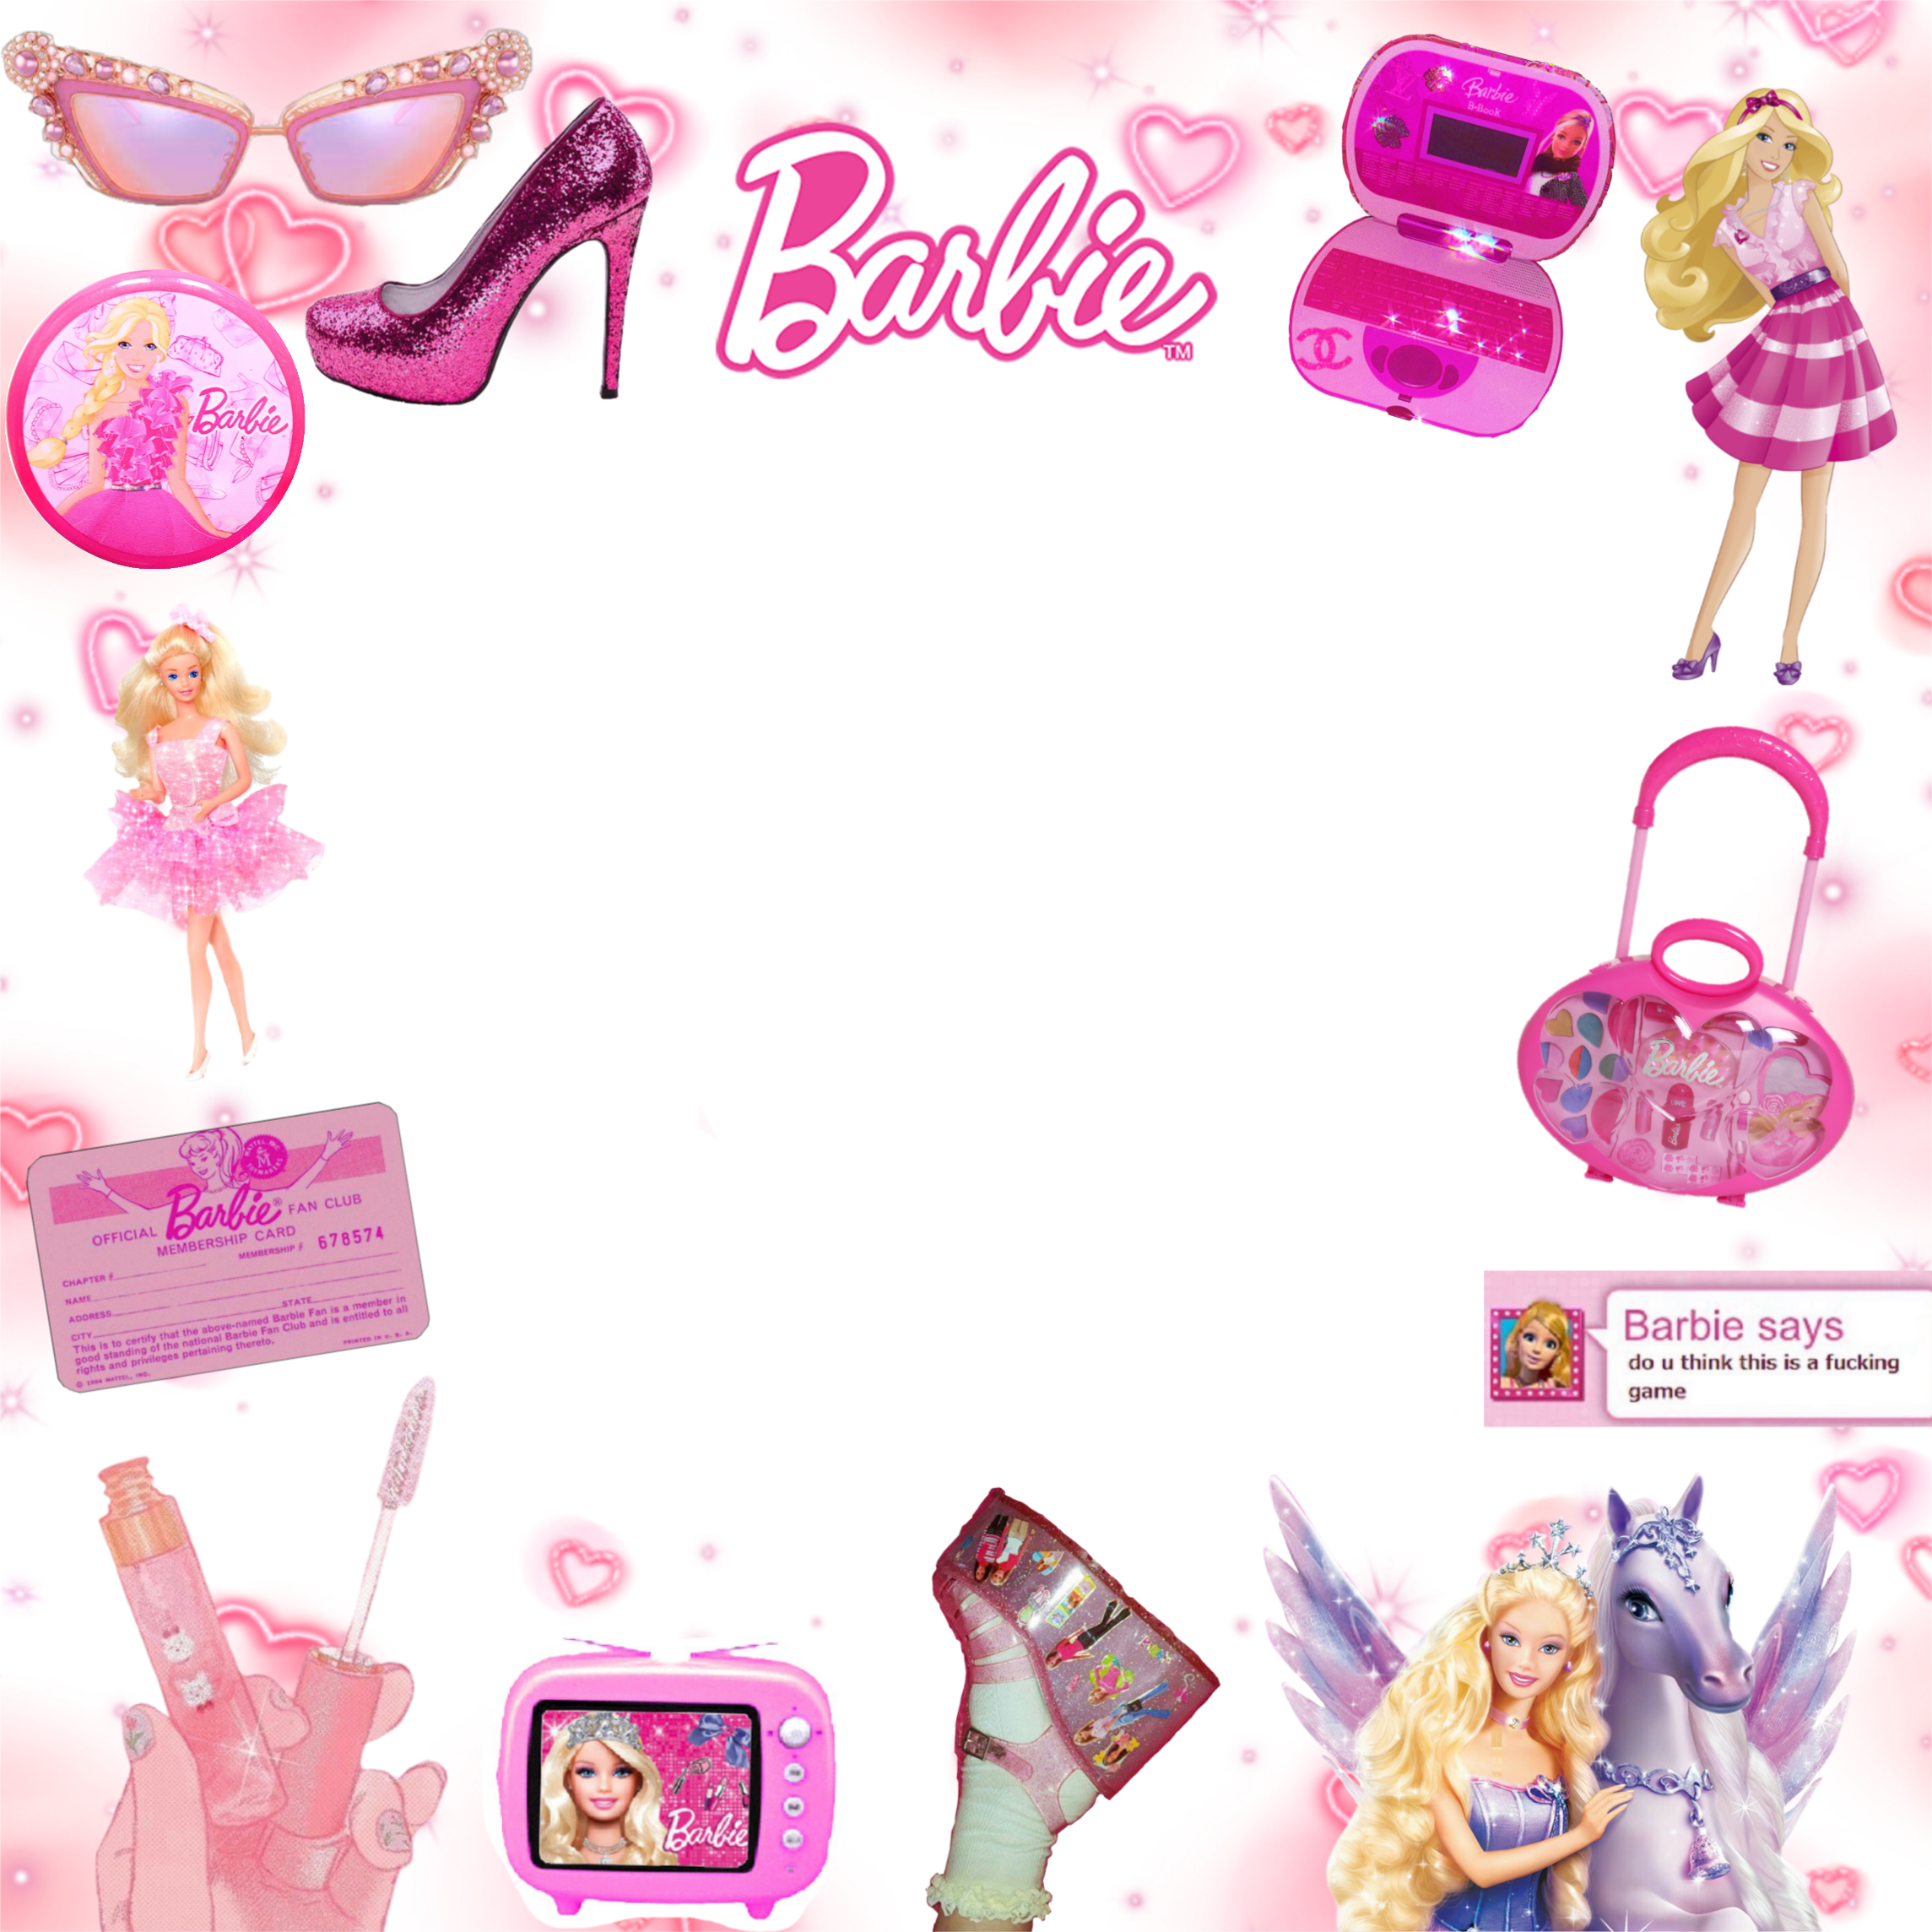 Membership club barbie fan • Barbie